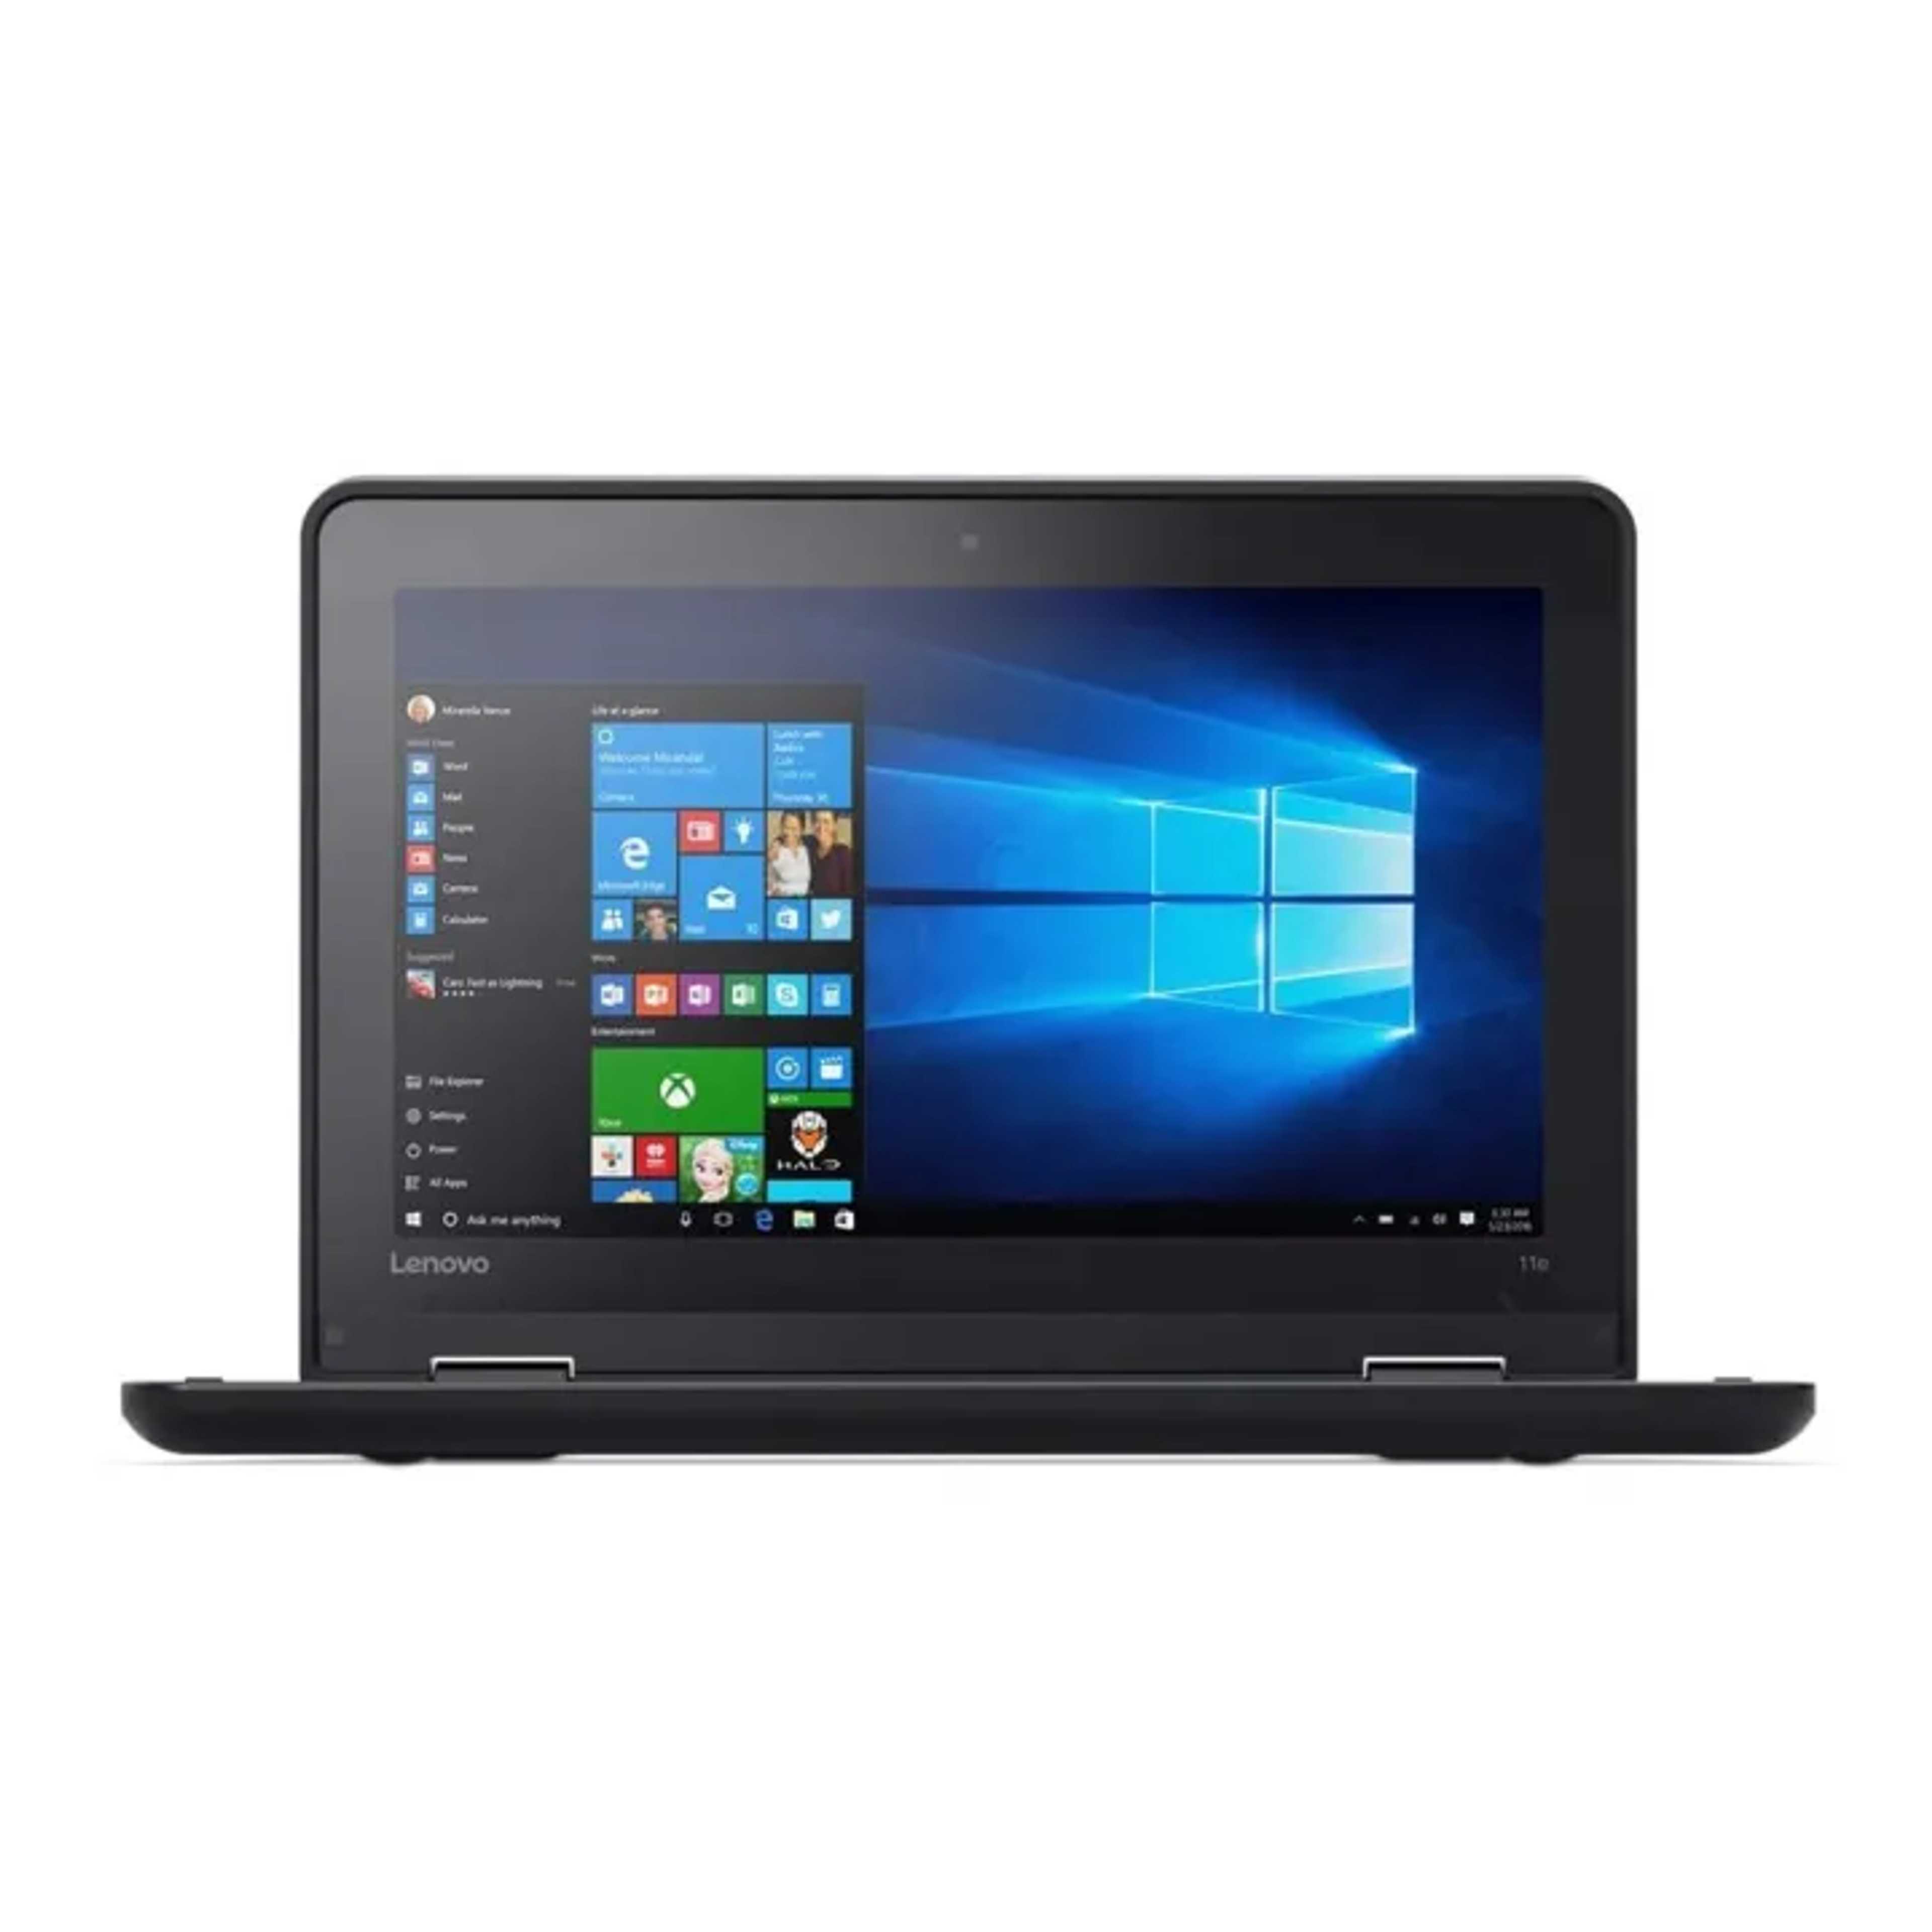 Lenovo ThinkPad Yoga 11e 11.6-inch Touch Screen  360 Convertible Laptop ( Intel® Celeron® Processor N3150 2M Cache, up to 2.25 GHz 4GB 128GB SSD Windows 10 Pro Intel HD Graphics), Black